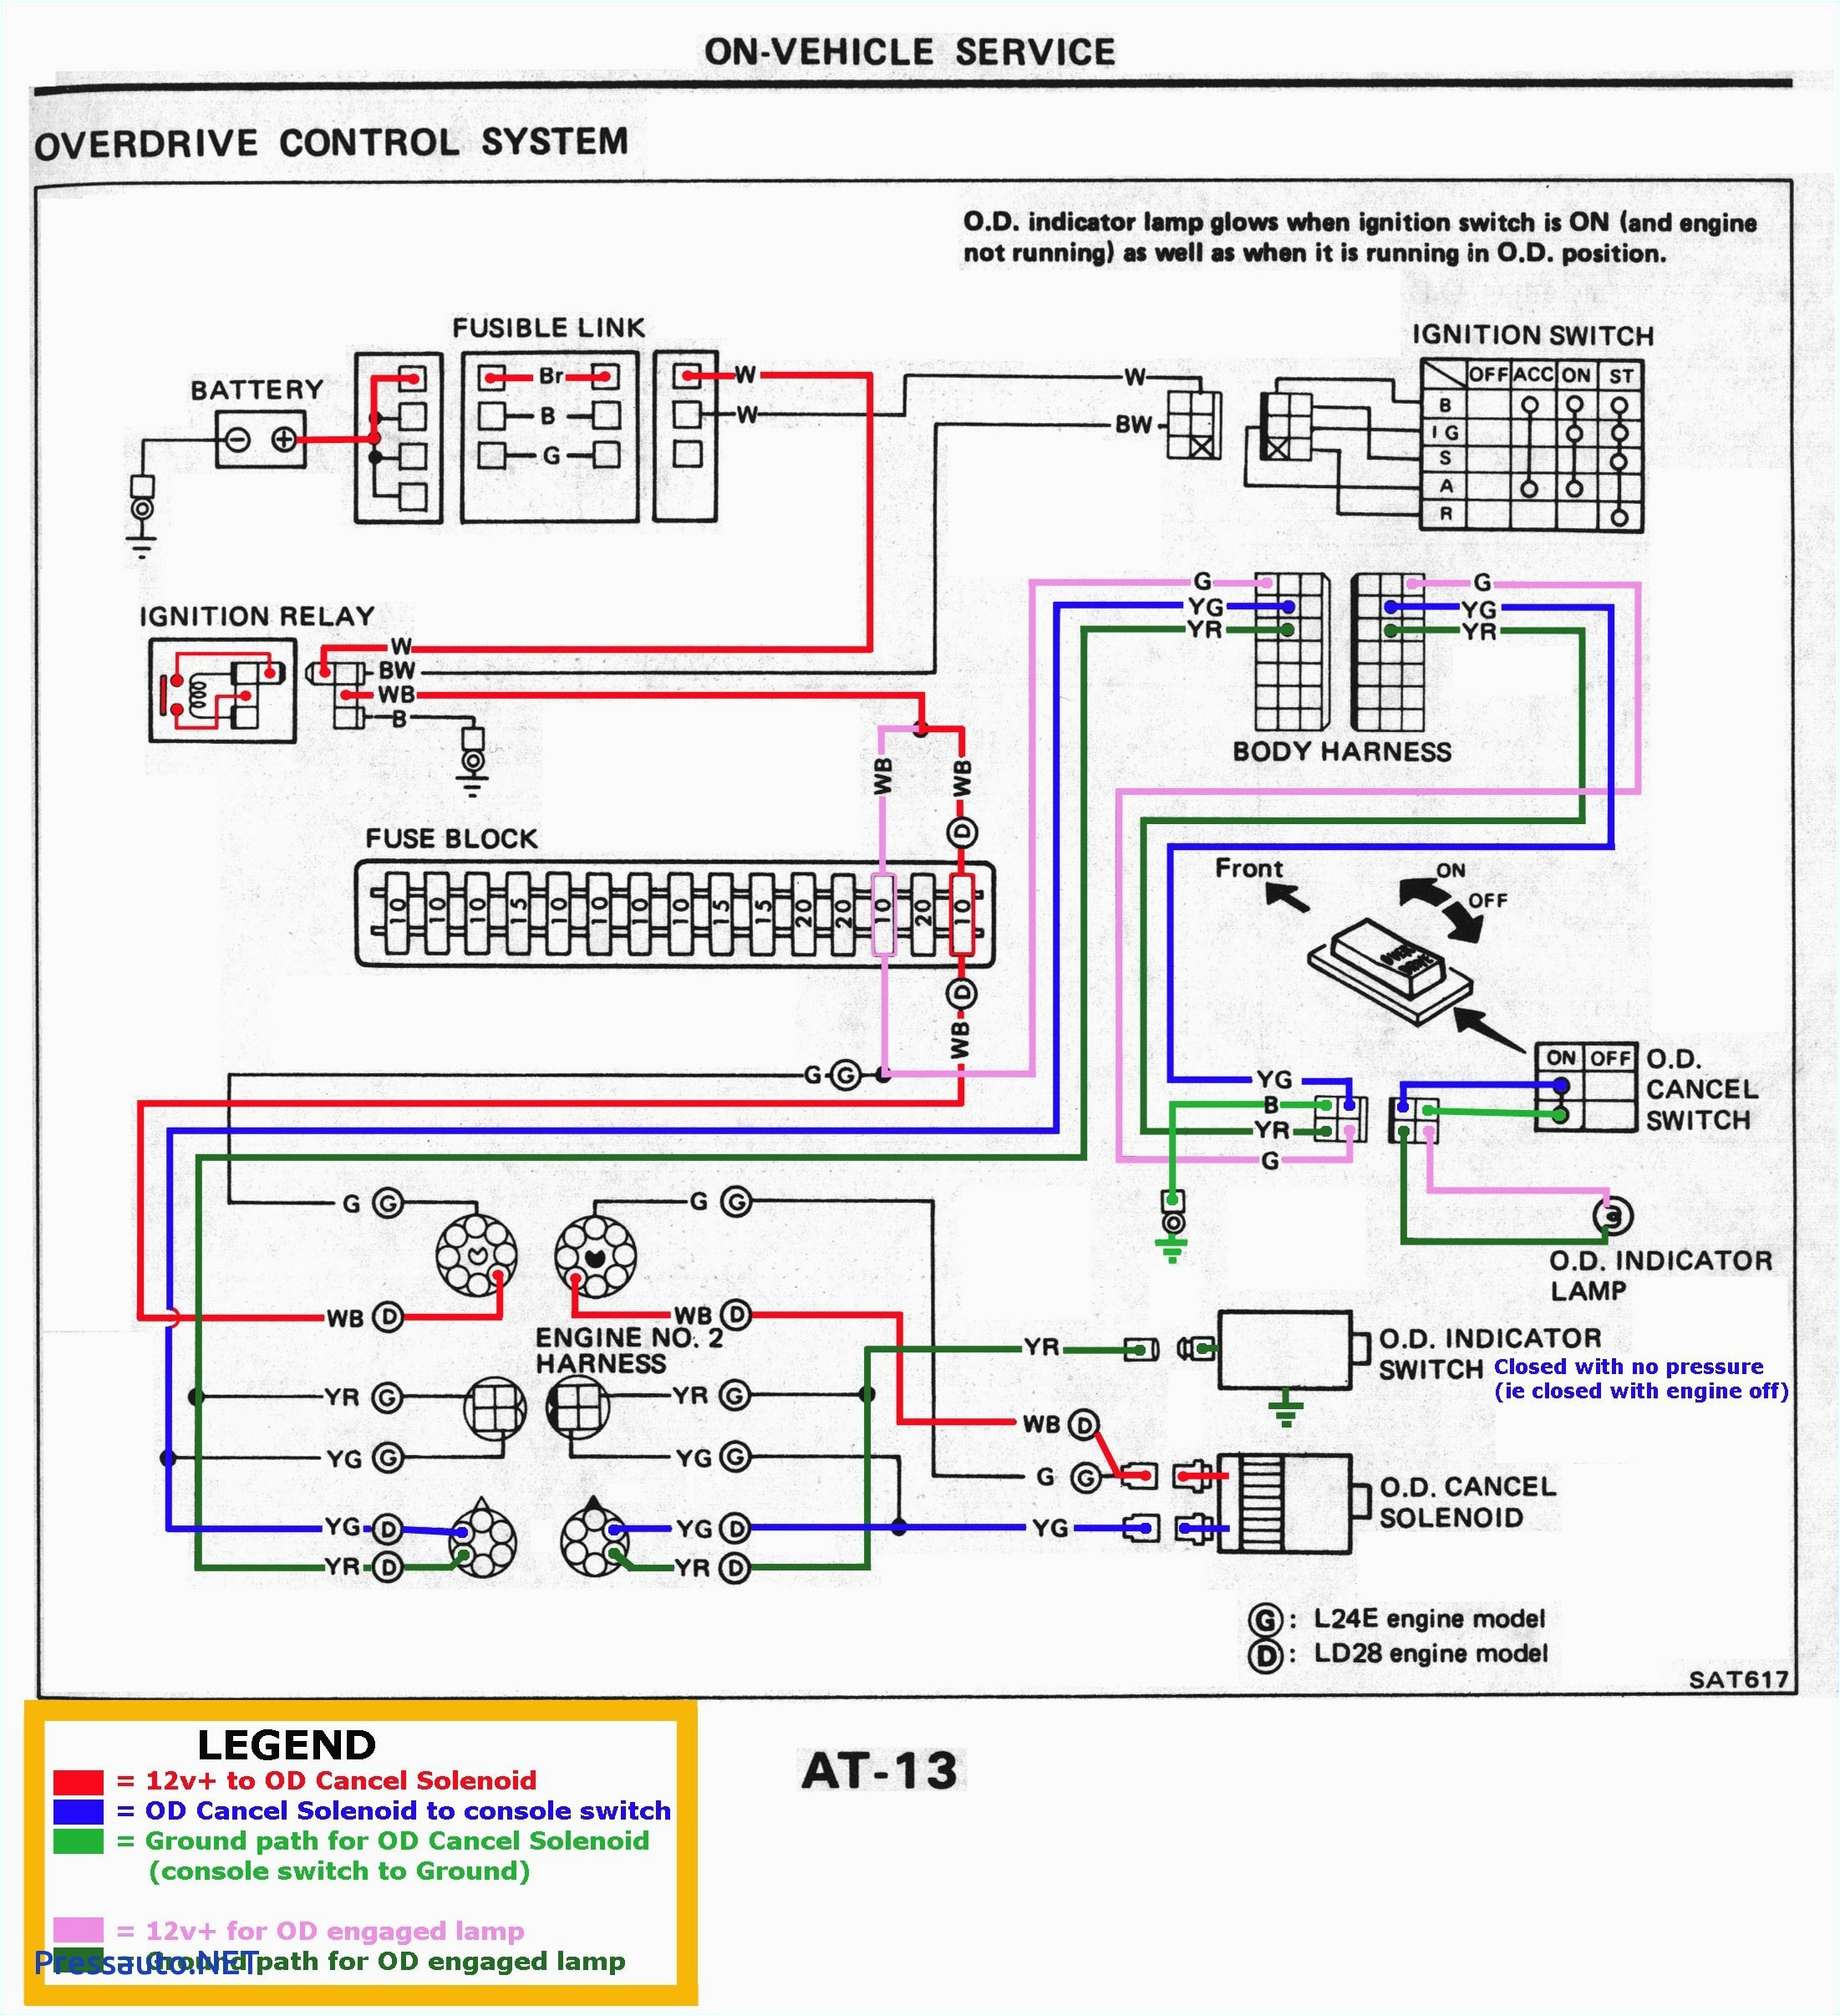 john deere la115 wiring diagram unique john deere wiring diagrams new wiring diagram for john deere gator jpg